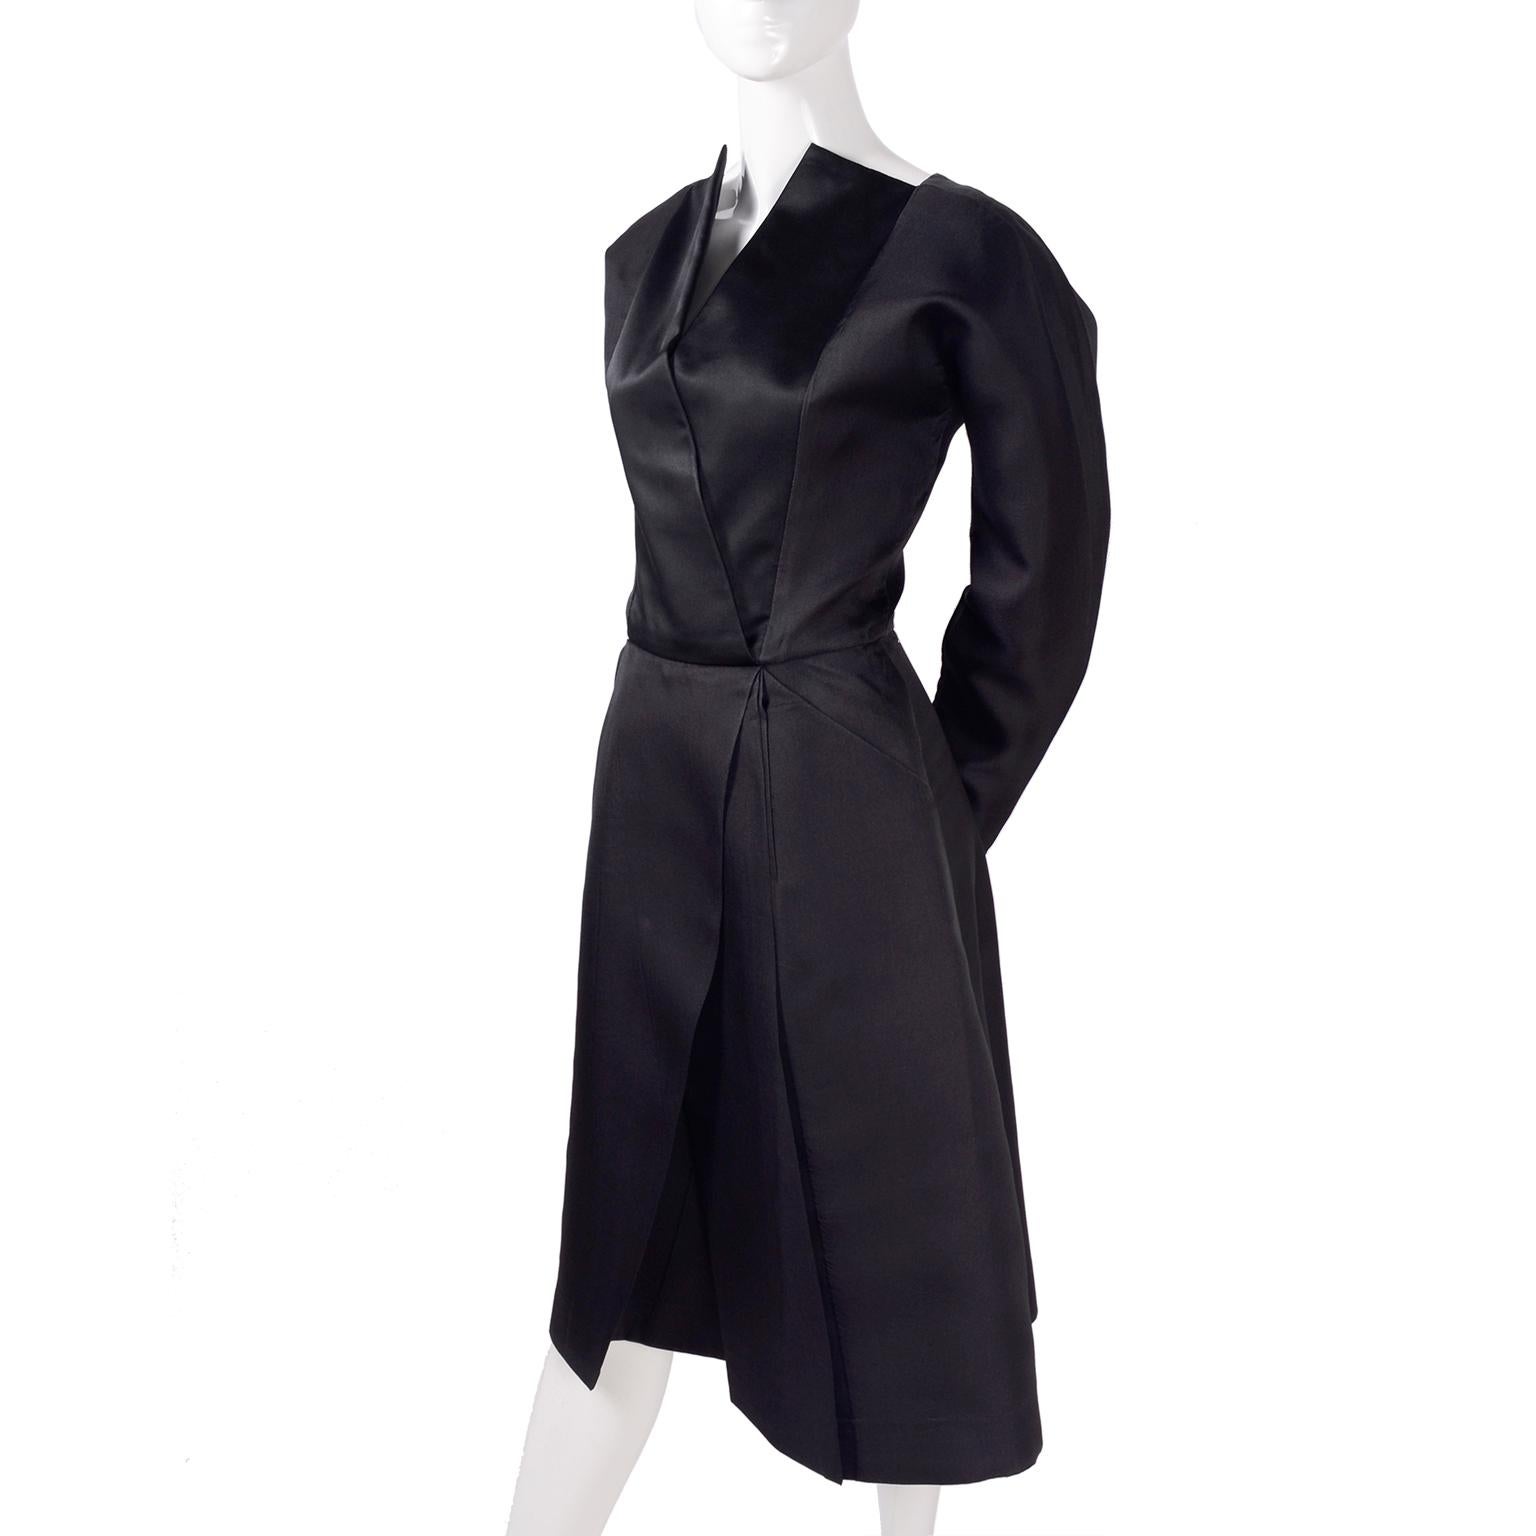 Vintage Black Geoffrey Beene Dress W/ Detailed Origami Folds & Styling 7